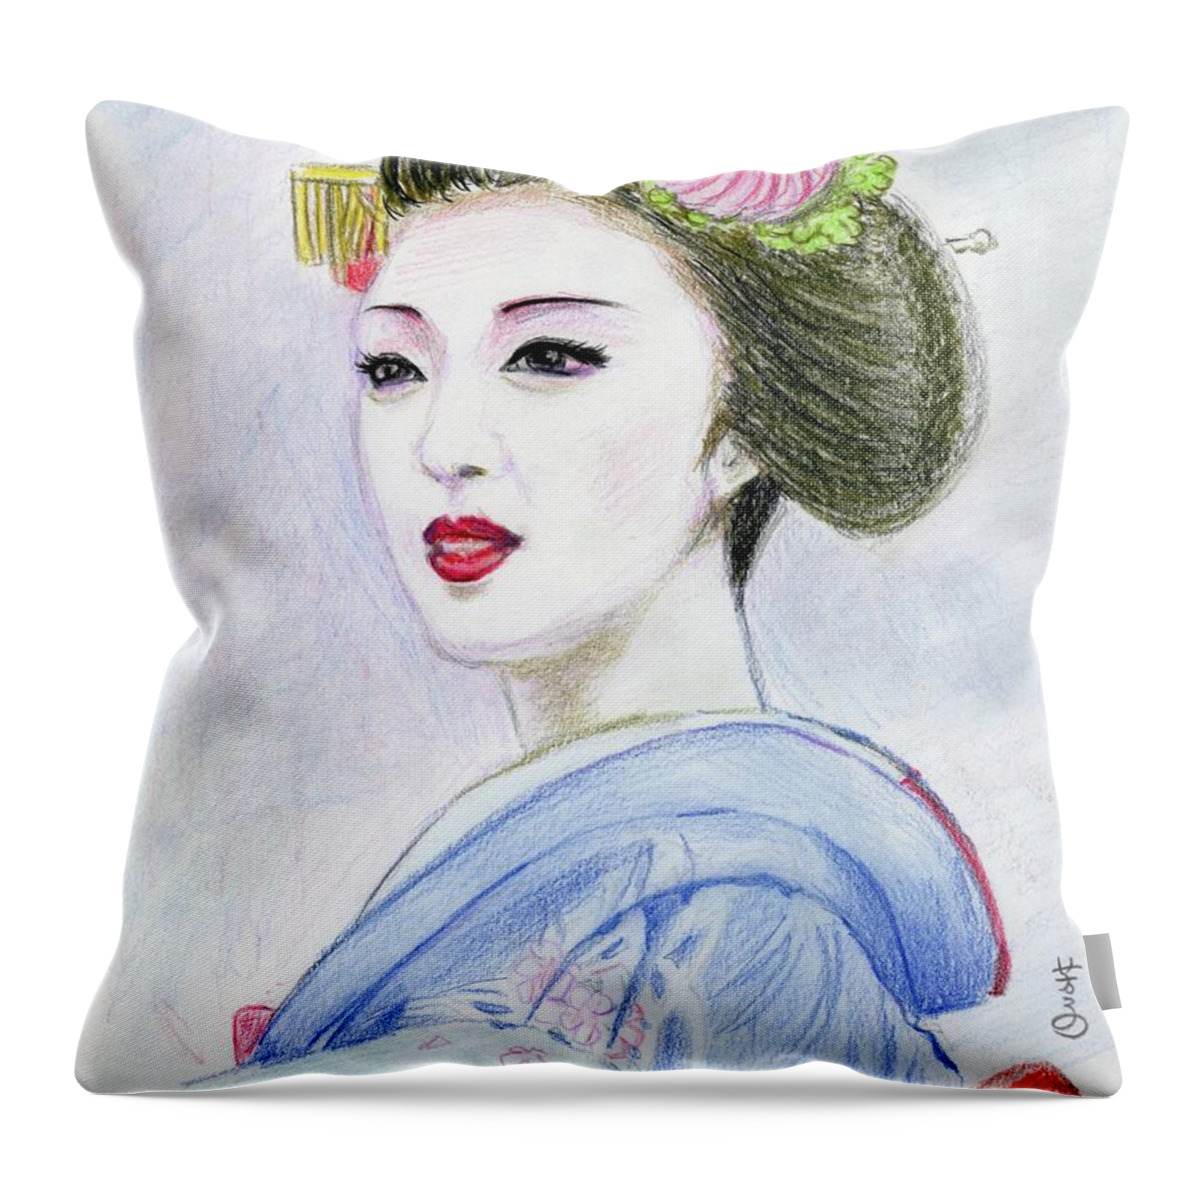 Geisha Throw Pillow featuring the drawing A Maiko Girl by Yoshiko Mishina